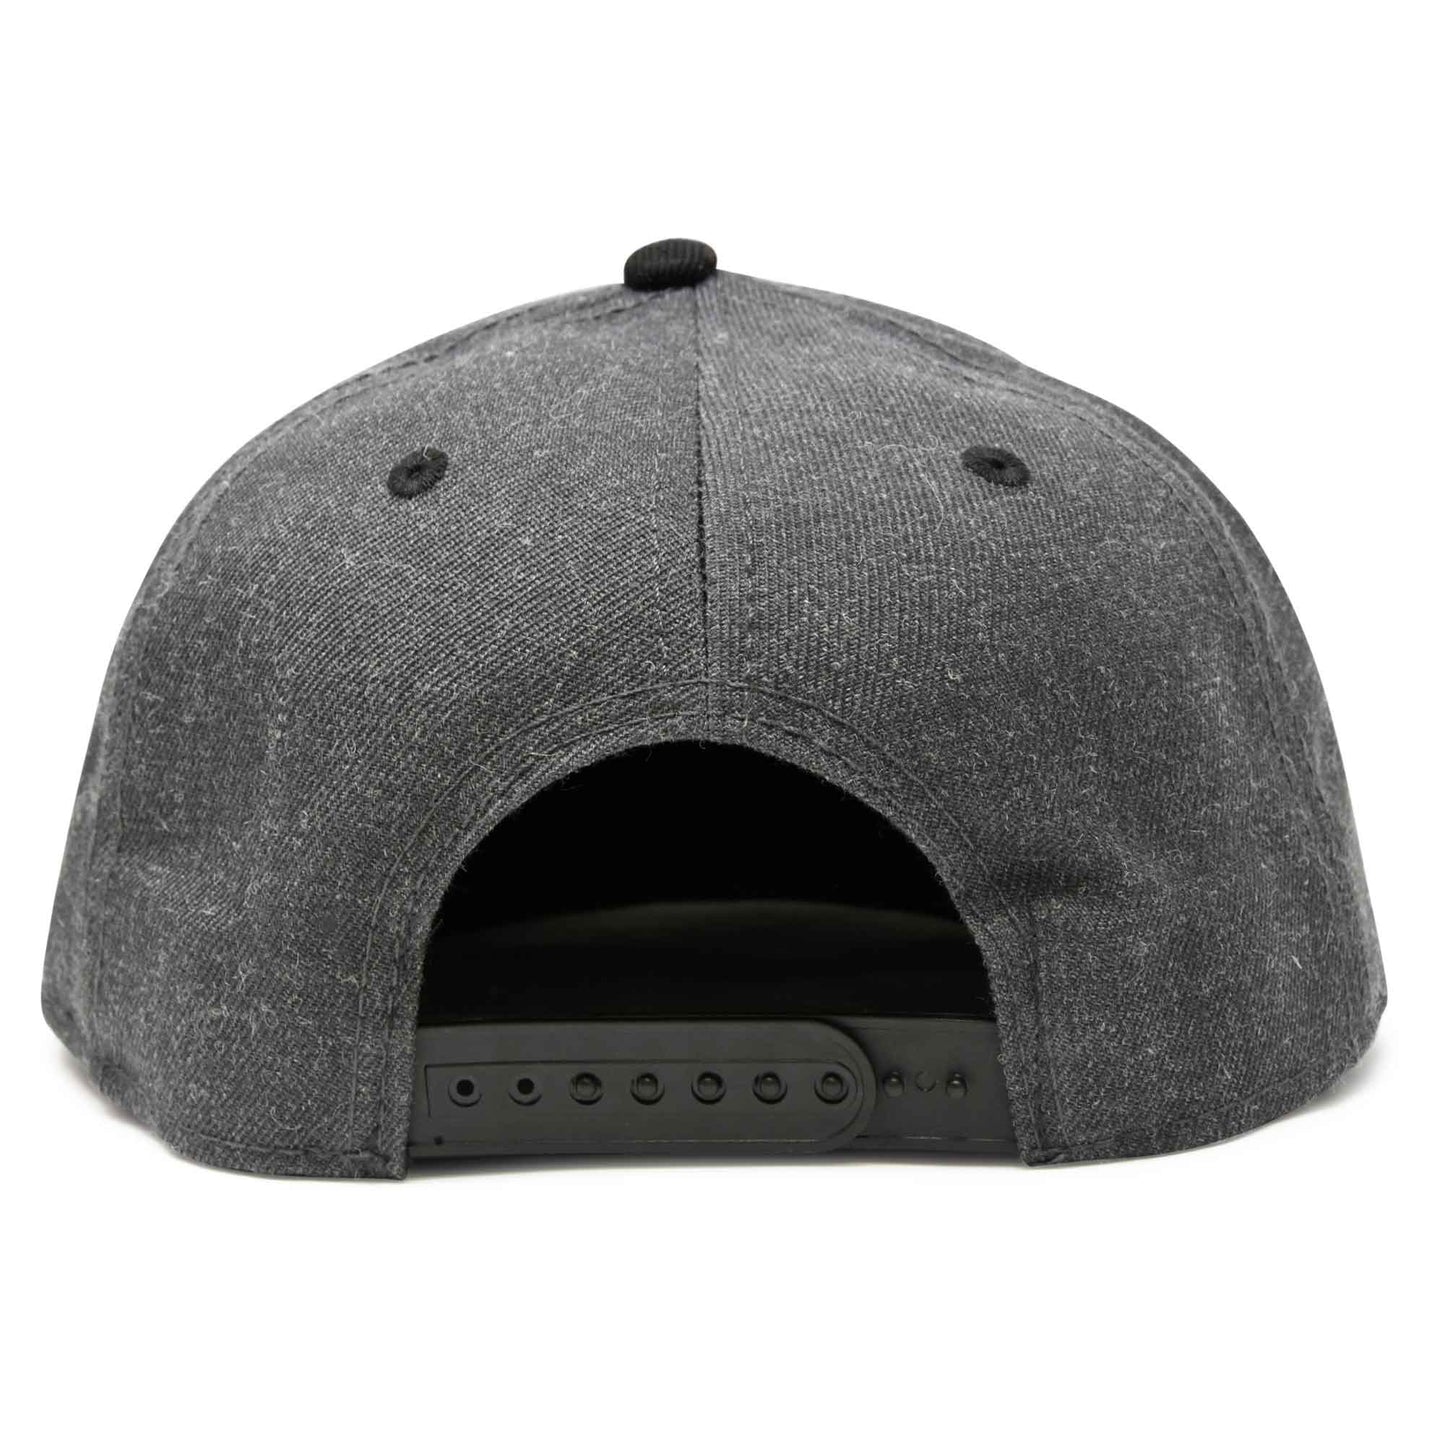 Dalix UFO Snapback Flat Bill Baseball Hat Embroidered Cap Mens in Black Light Gray